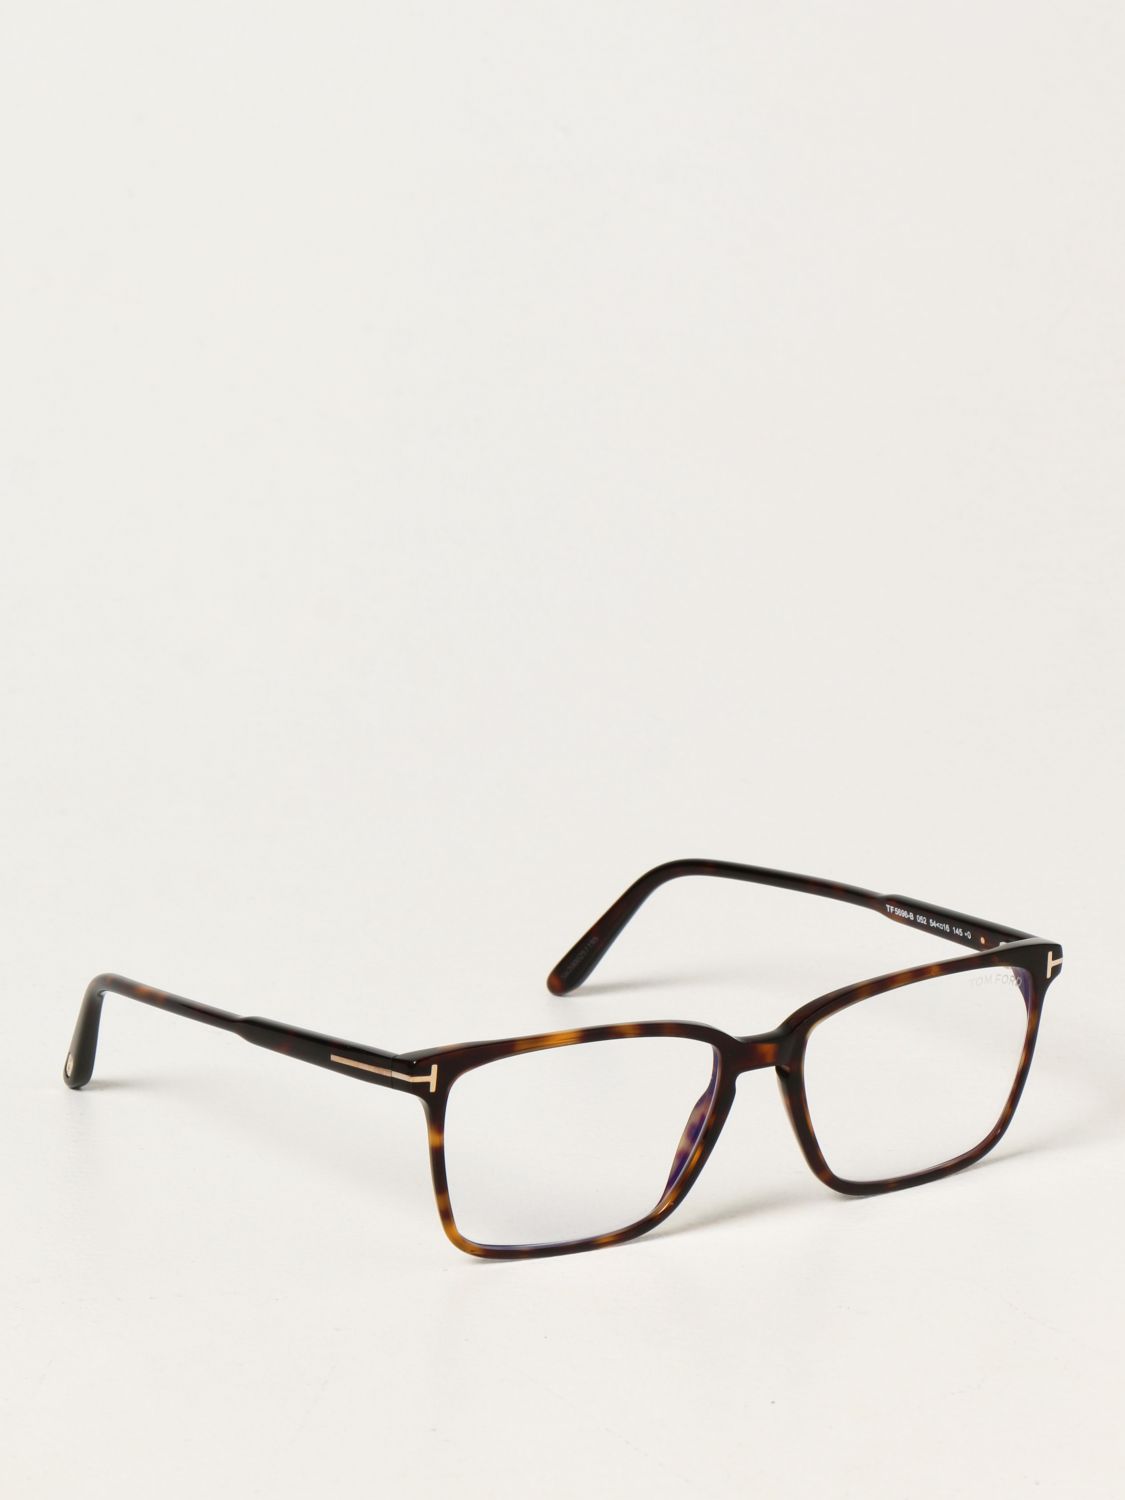 Gafas Tom Ford: Gafas mujer Tom Ford marrón 1